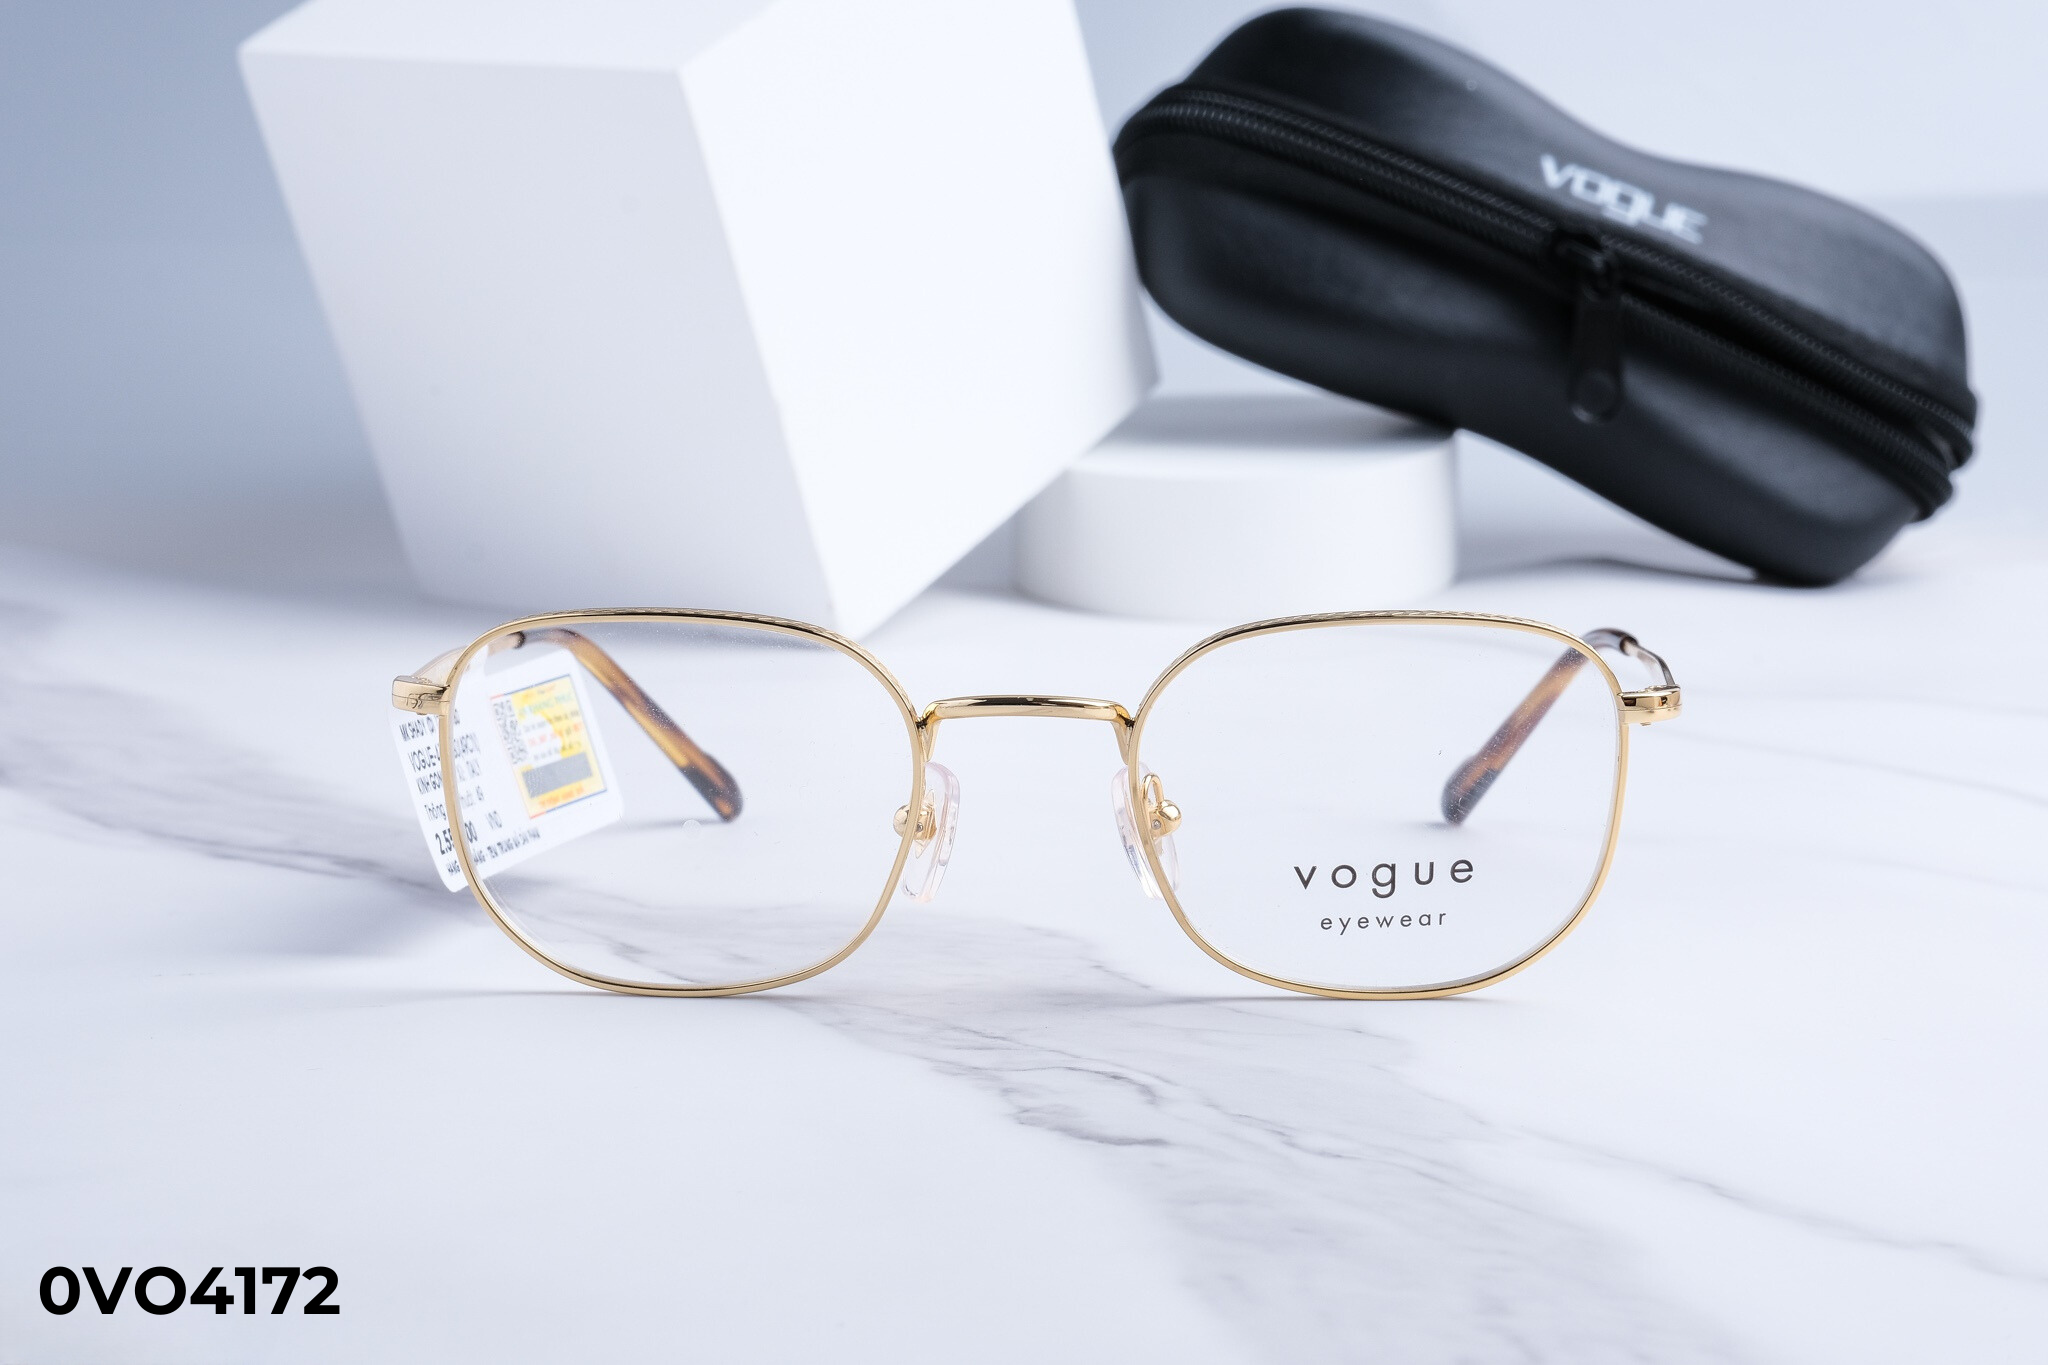  Vogue Eyewear - Glasses - 0VO4172 